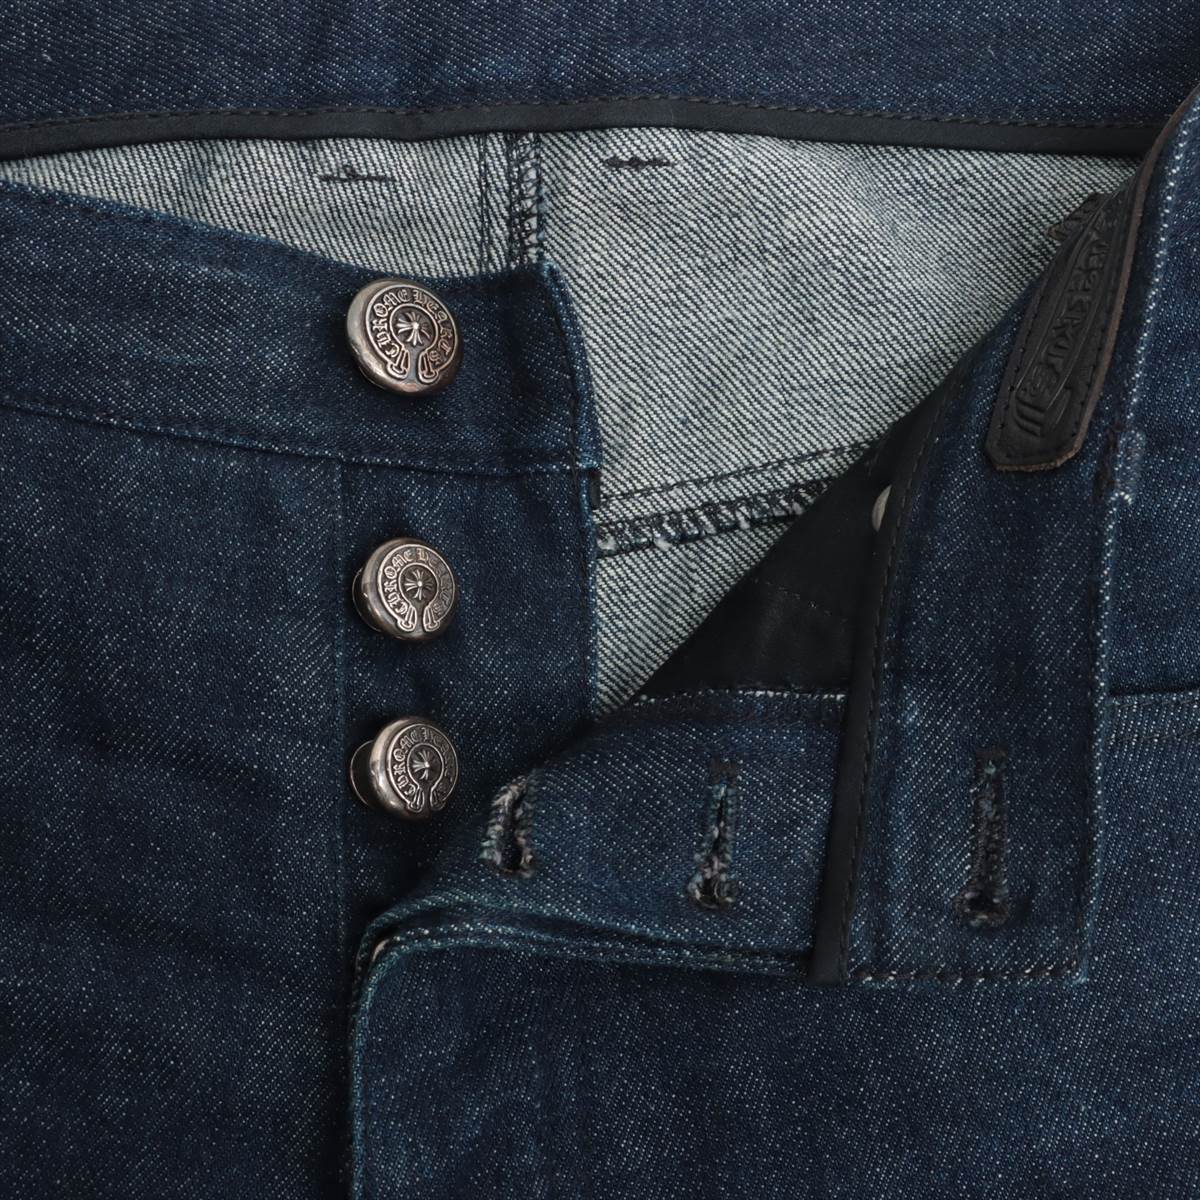 Chrome Hearts Denim pants Cotton size 30 Navy blue Old Horseshoe button button fly